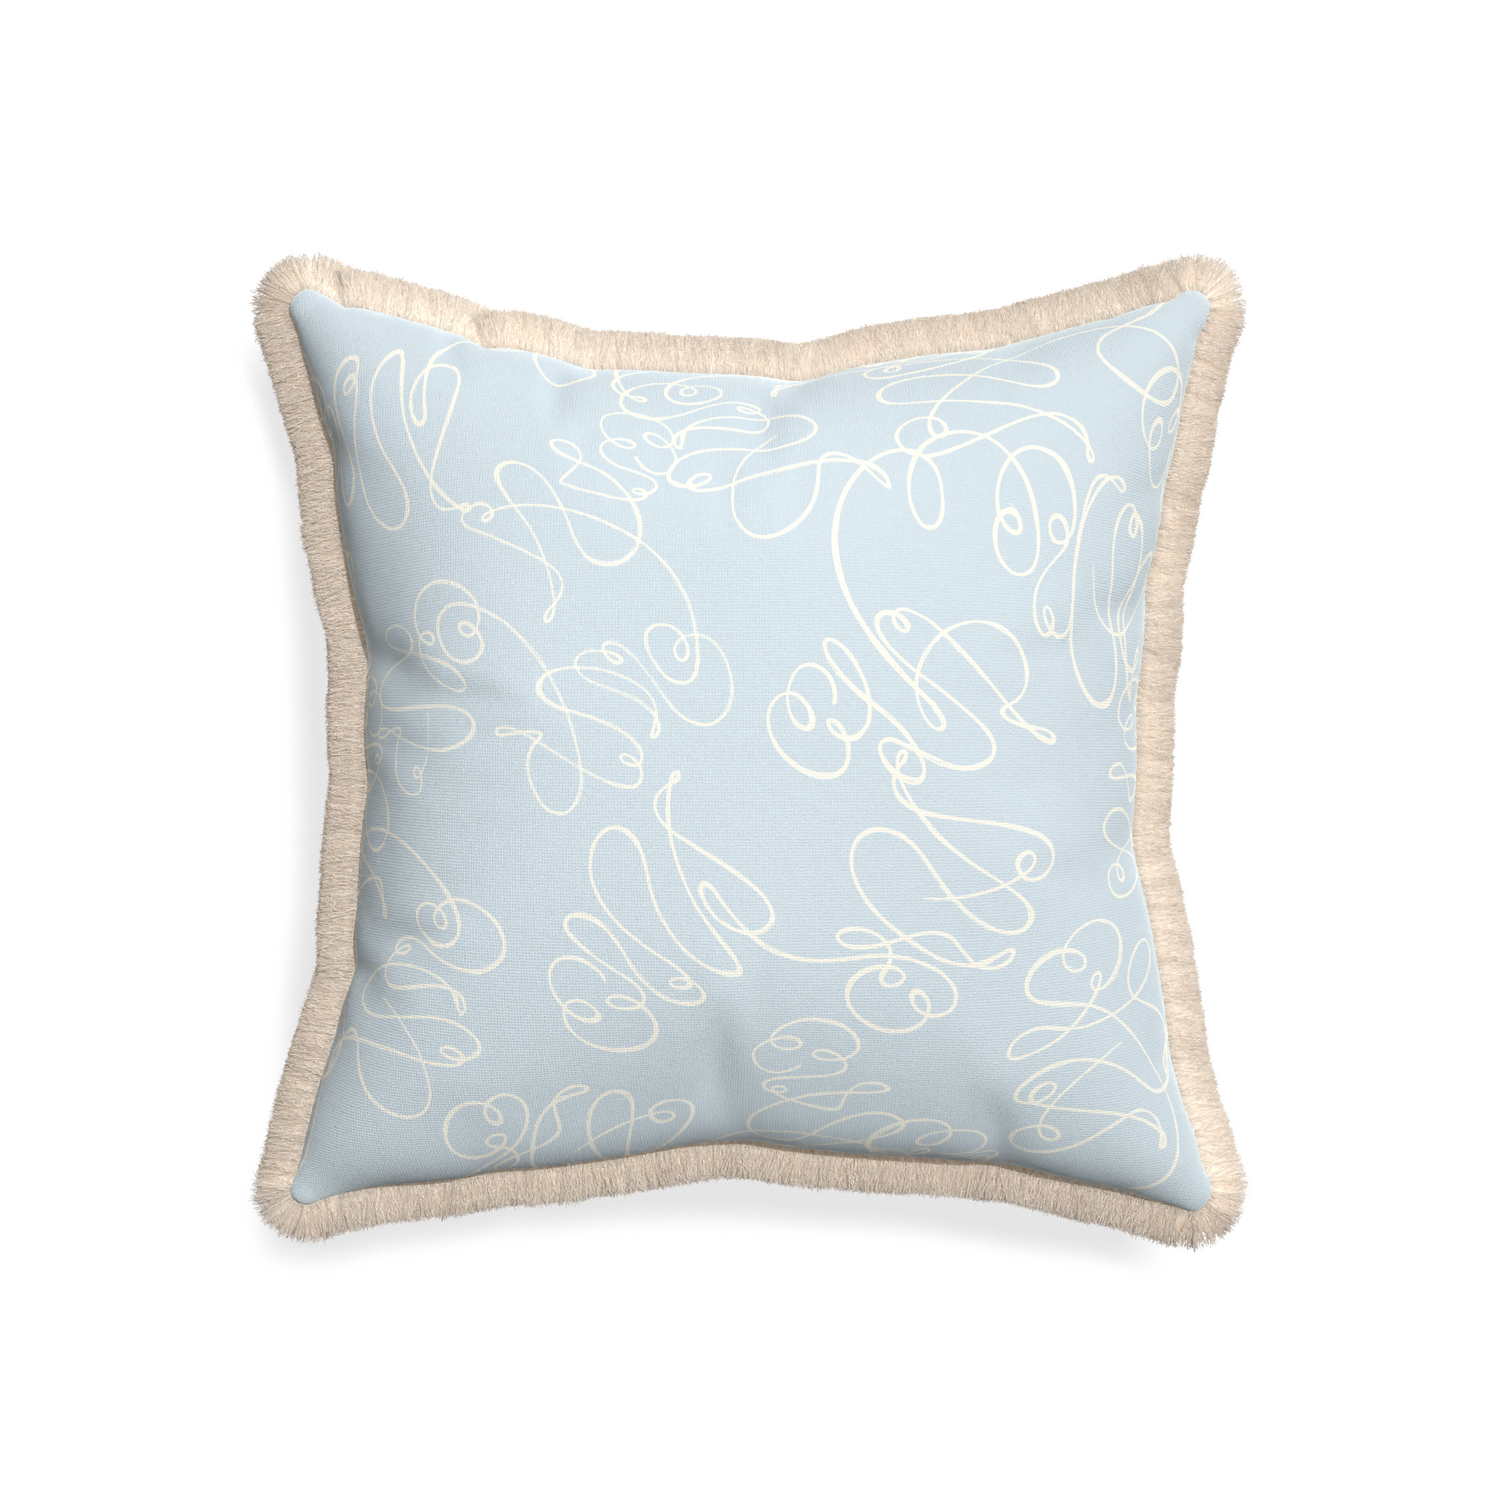 20-square mirabella custom pillow with cream fringe on white background